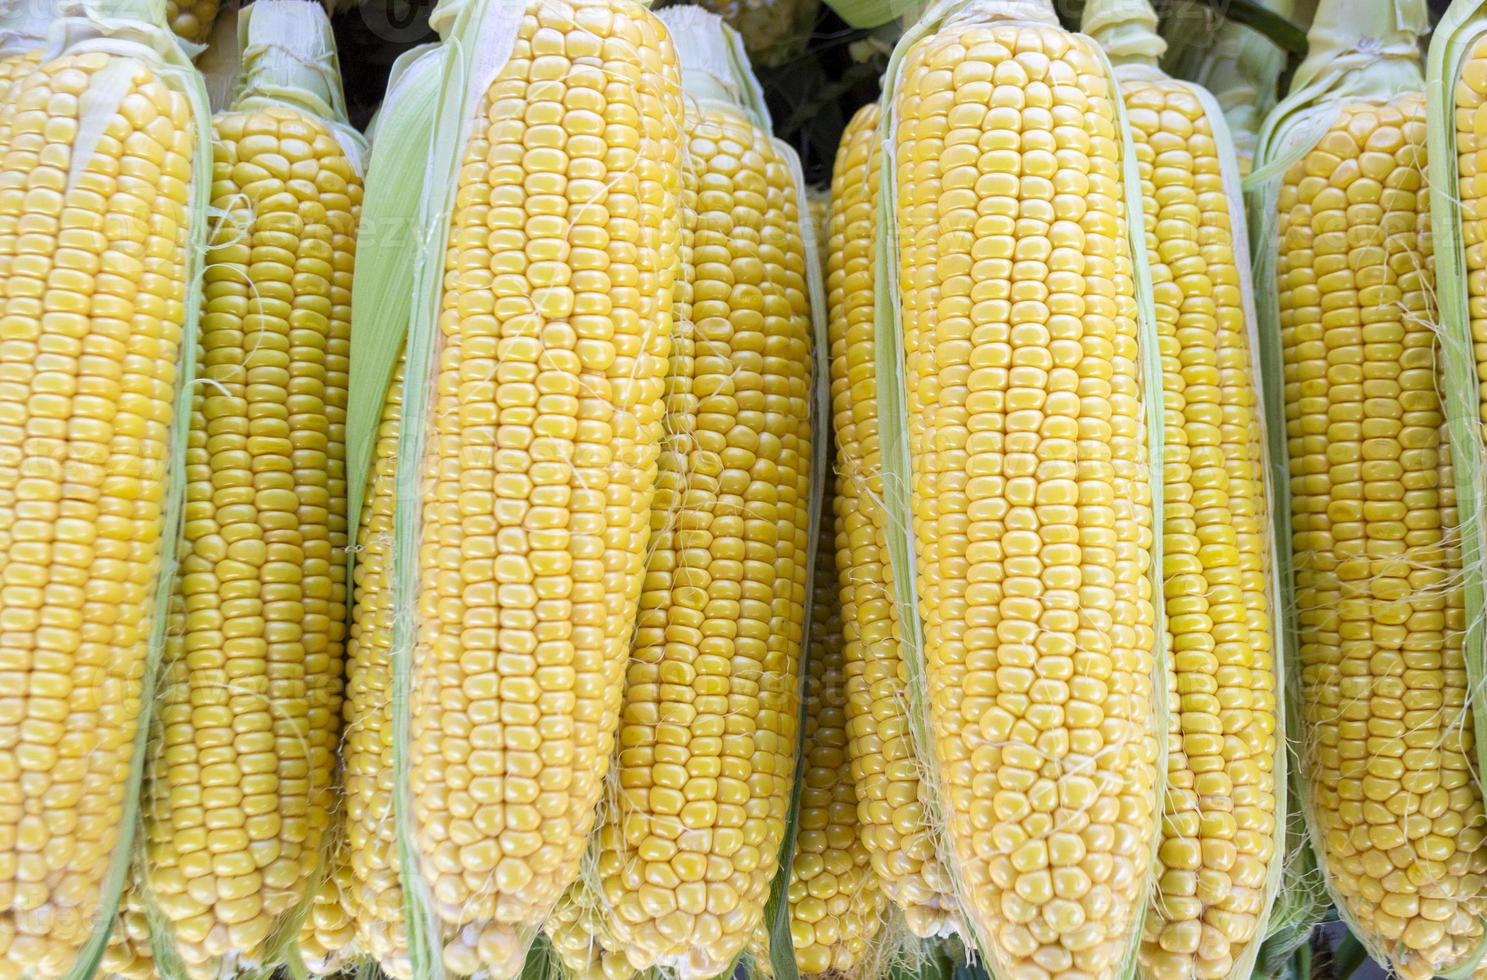 maíz crudo dulce fresco, primer plano, vista superior foto